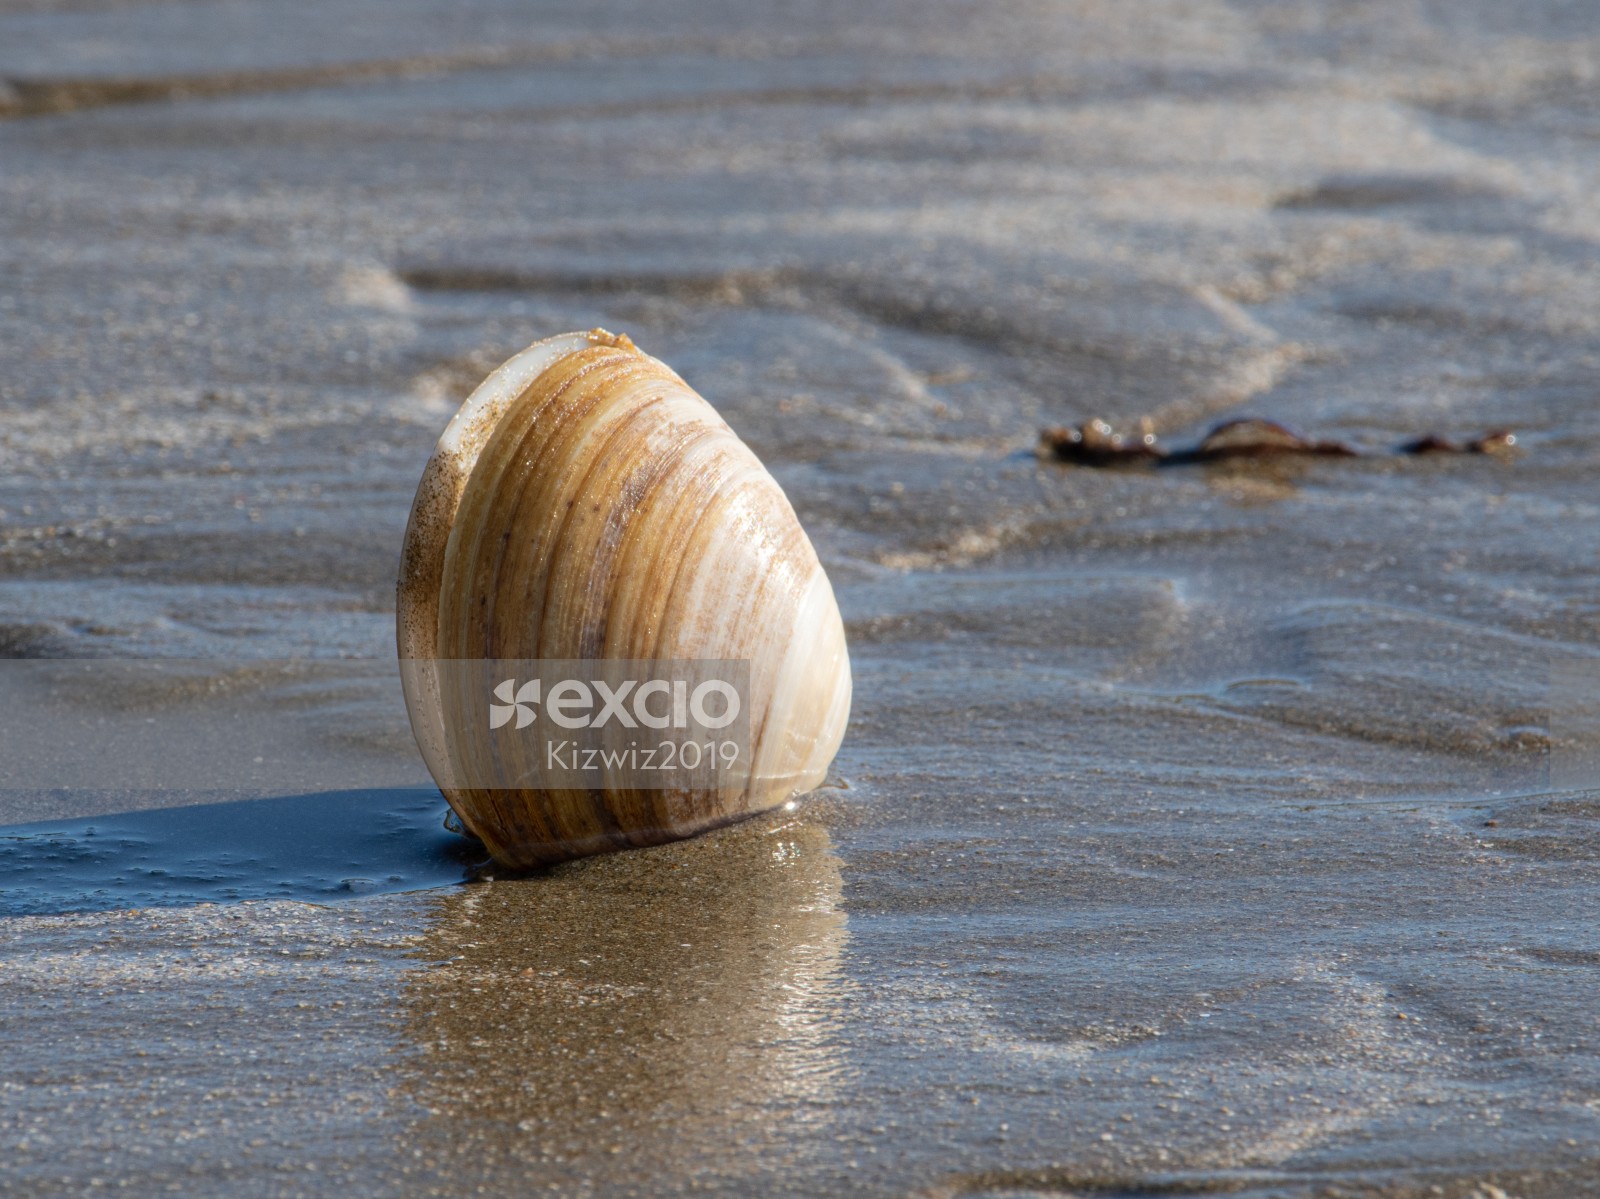 Sea shell close up